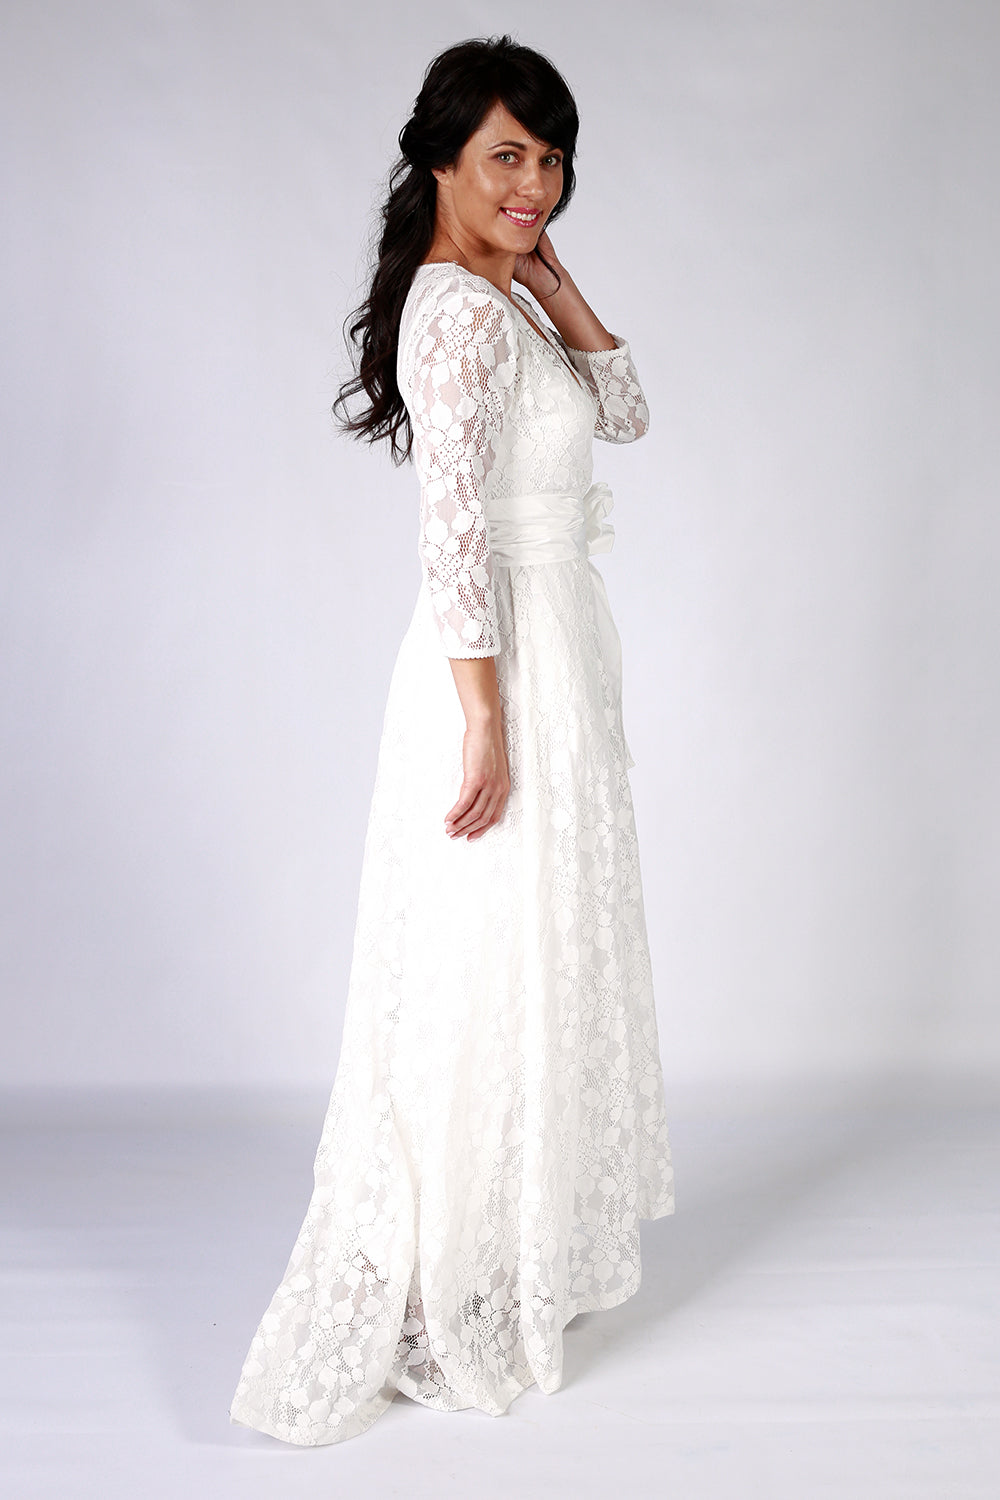 Sophie's Wedding Dress – Annah Stretton